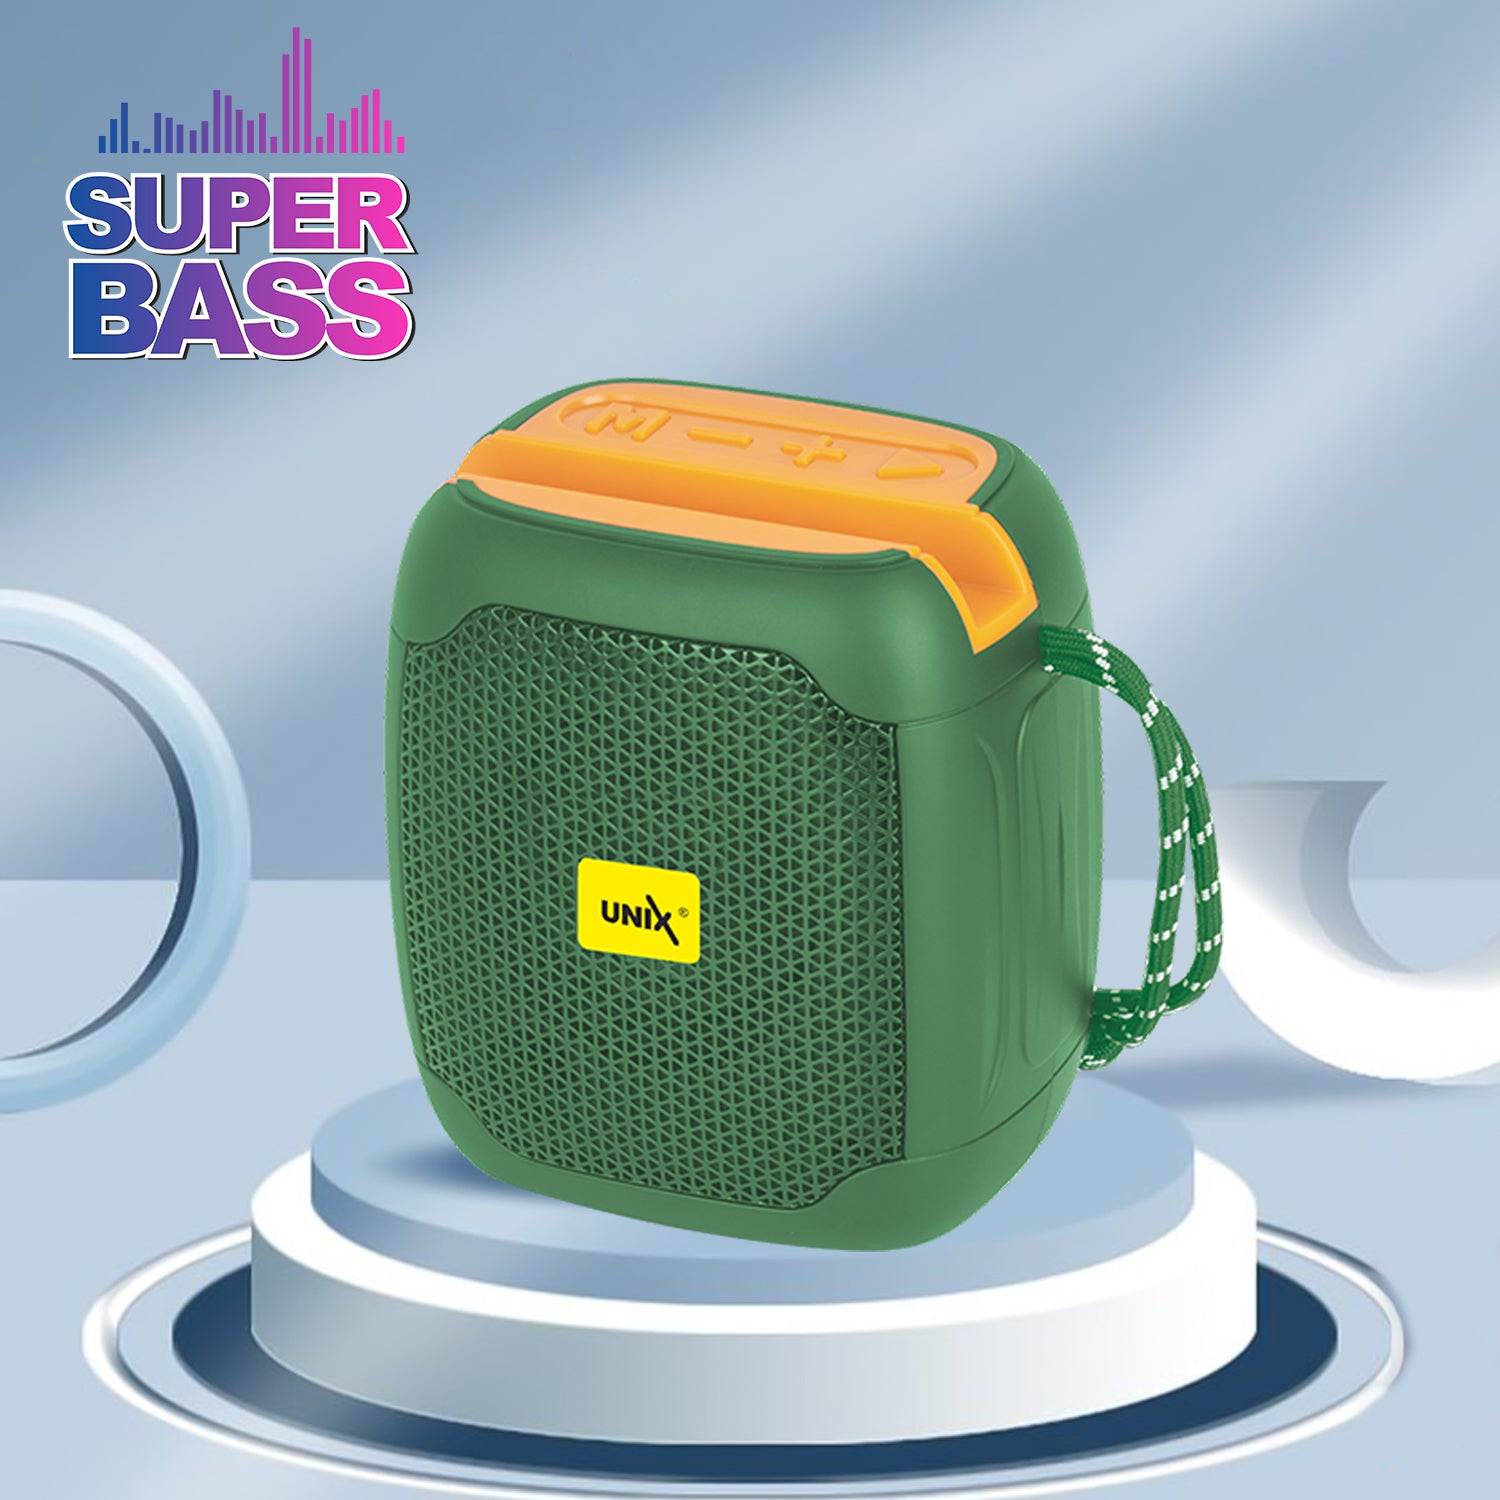 Unix UX-888 Super Sonic Wireless Speaker - Super Bass Green all